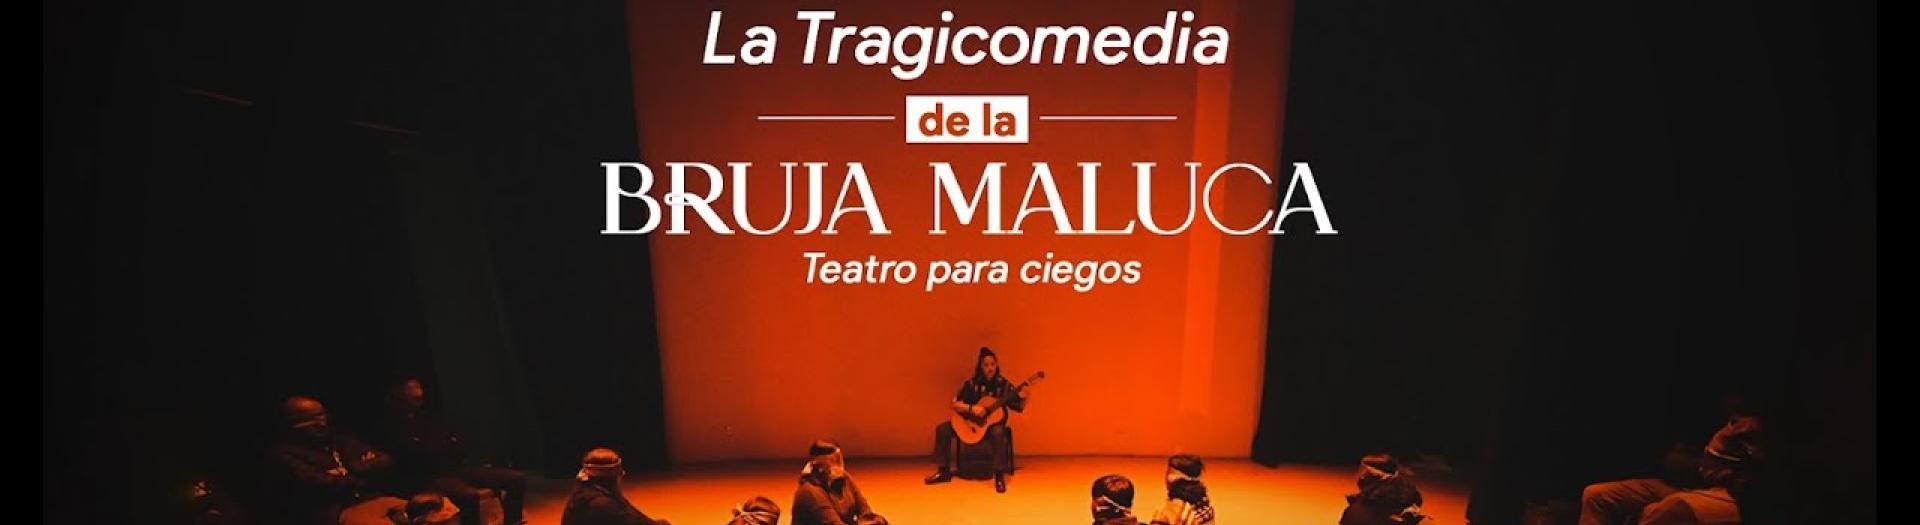 Embedded thumbnail for La tragicomedia de la bruja Maluca - Teatro para ciegos